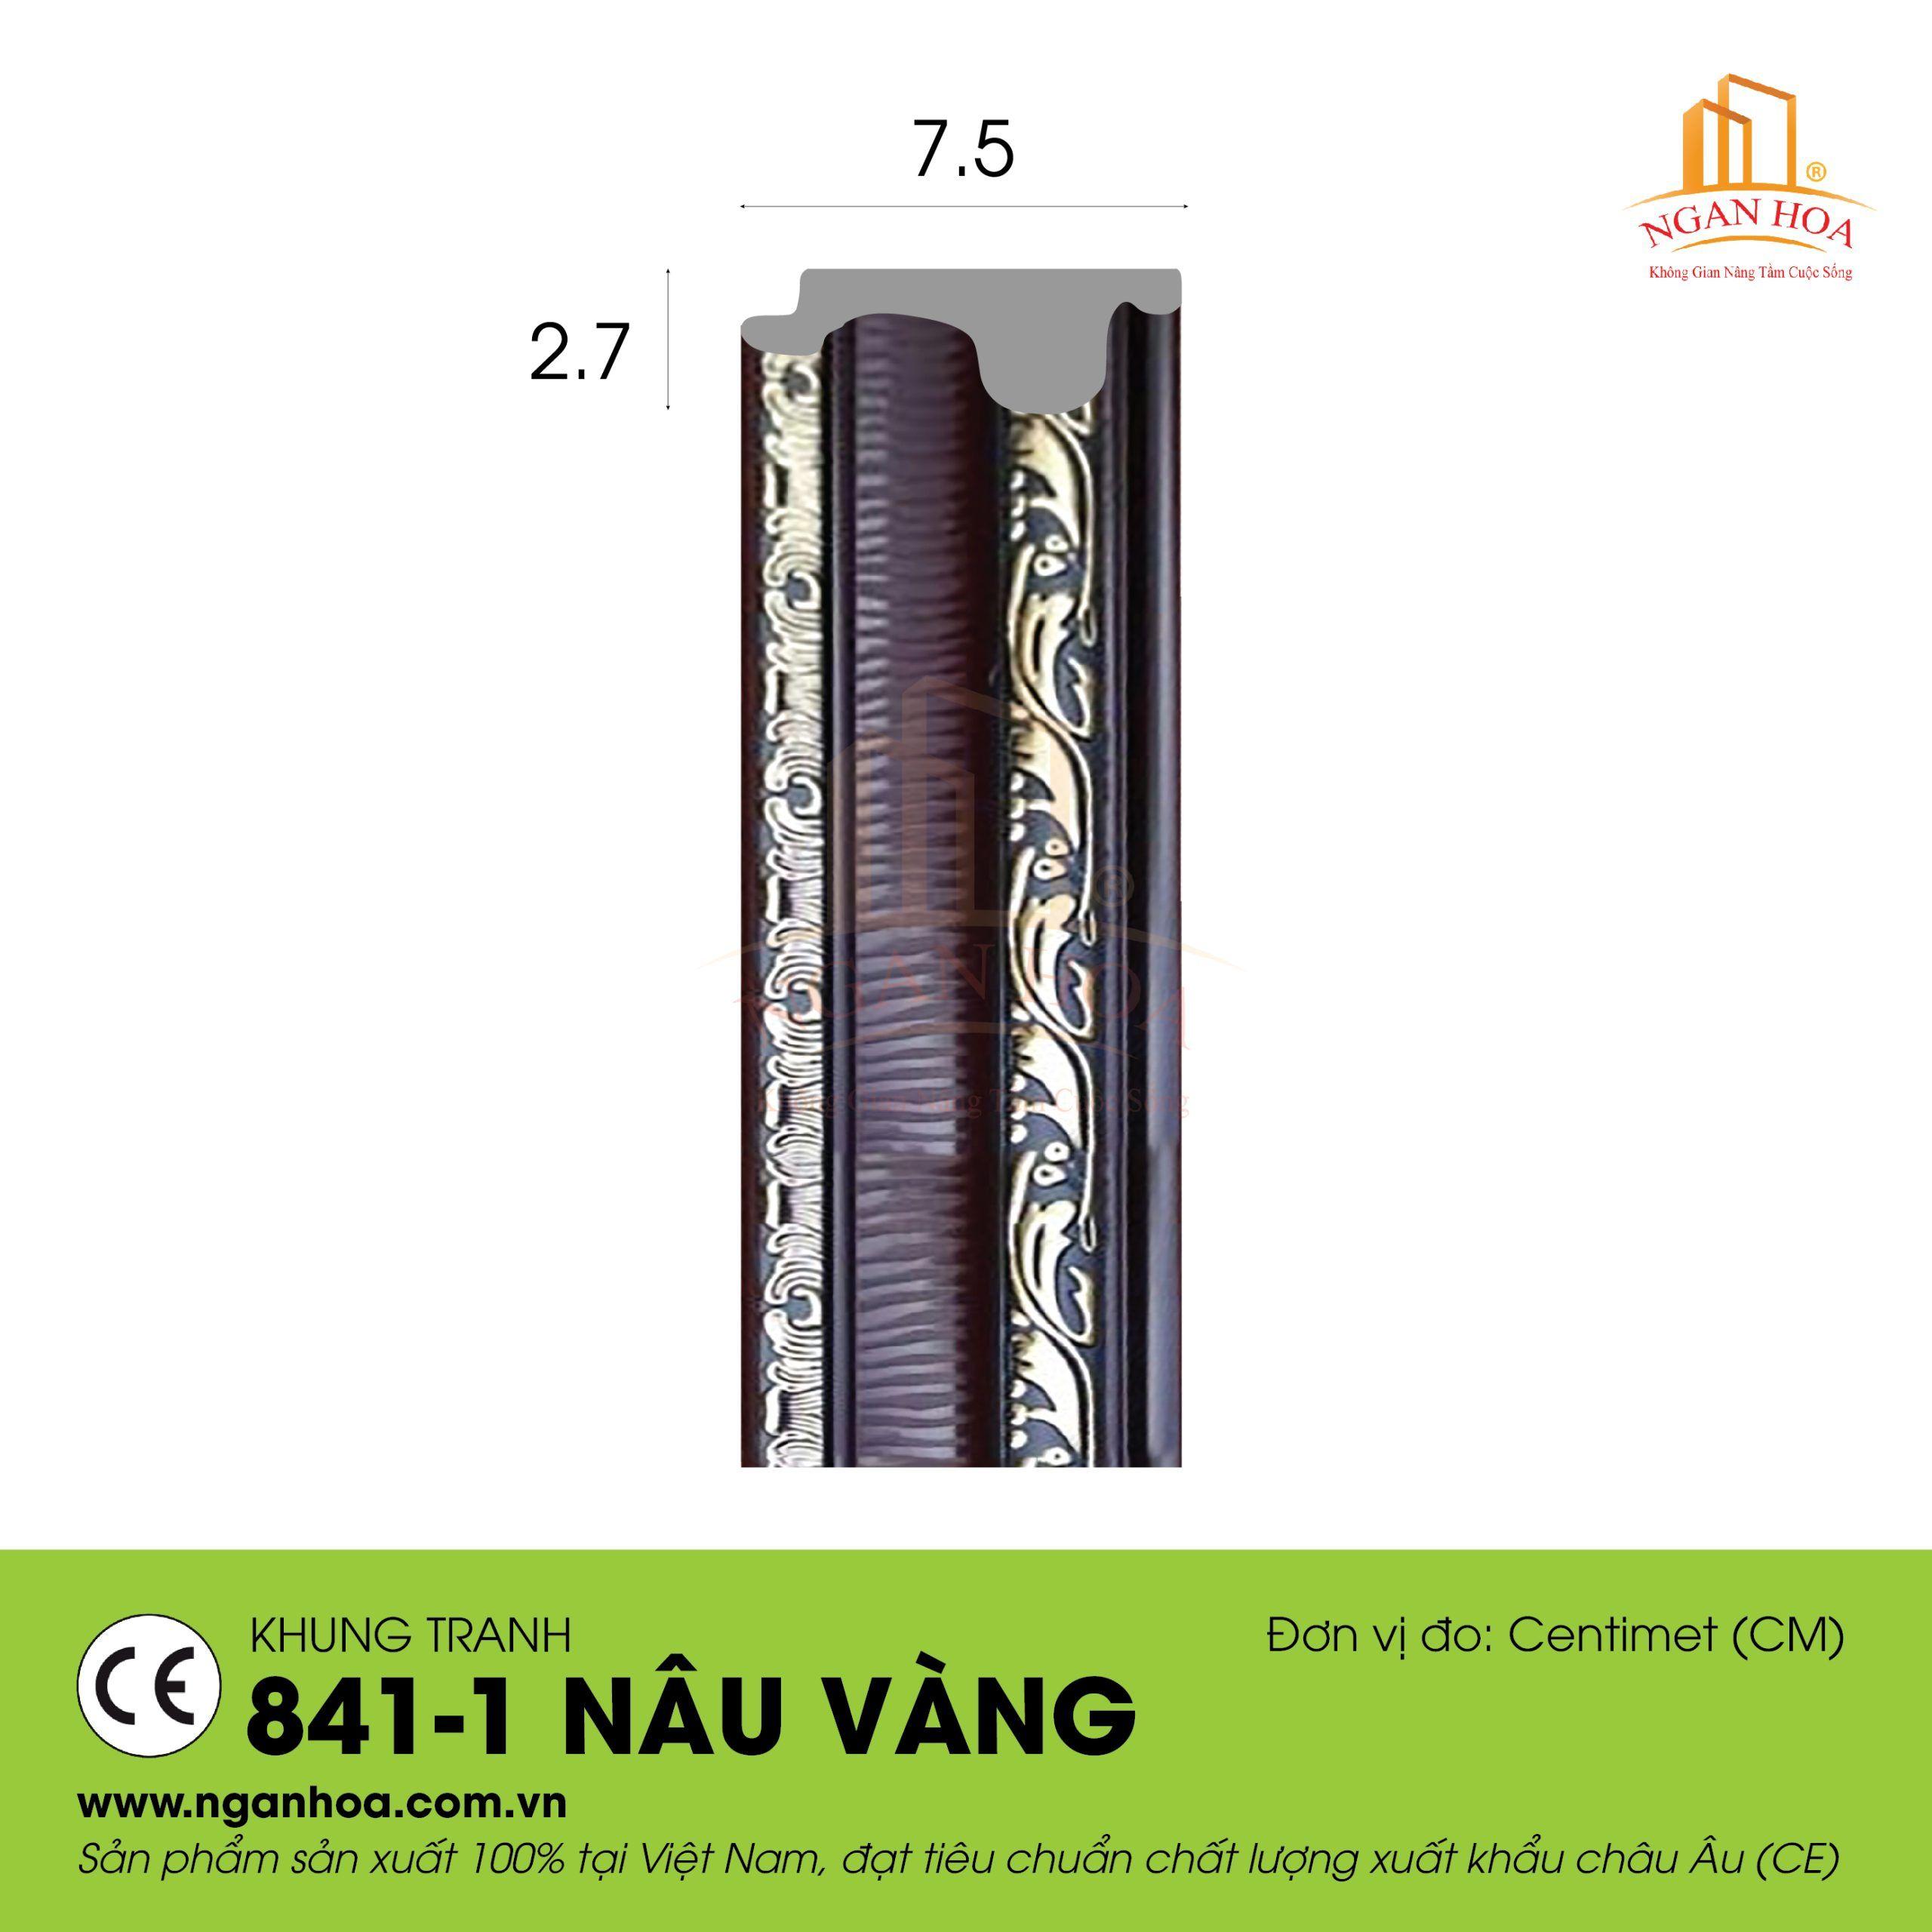 KT 841 1 Nau Vang scaled